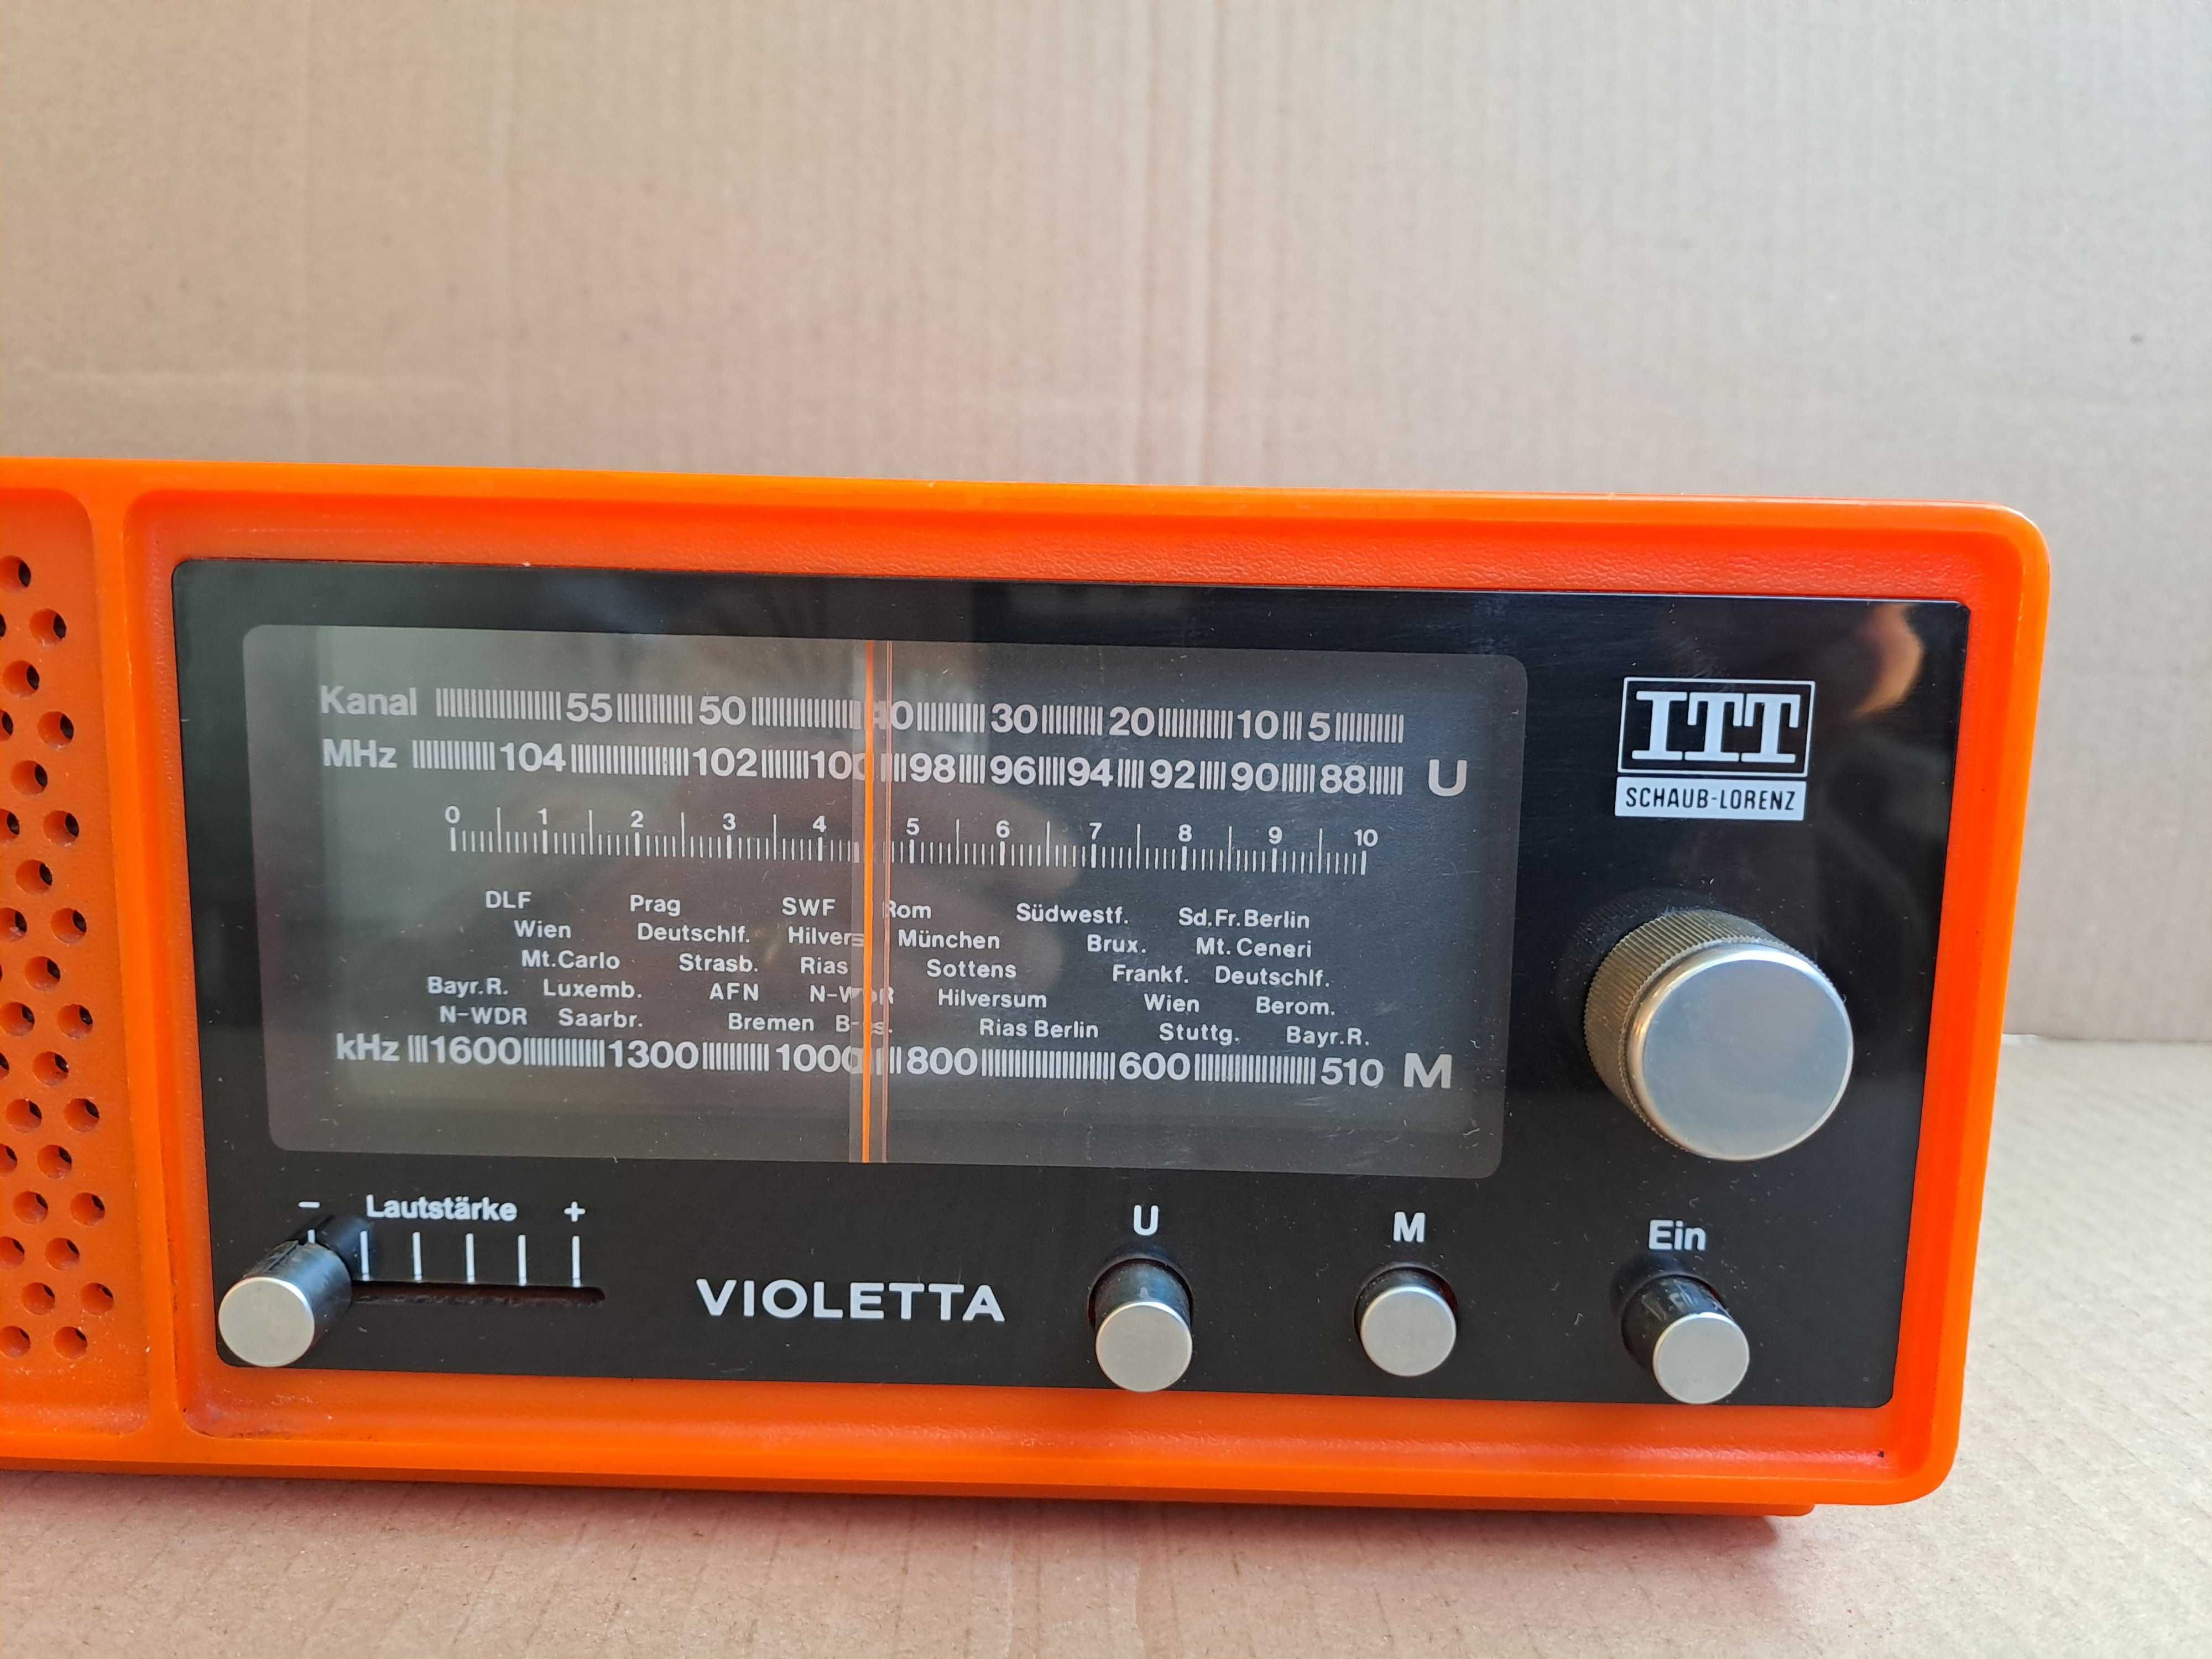 Radio ITT Violetta 103